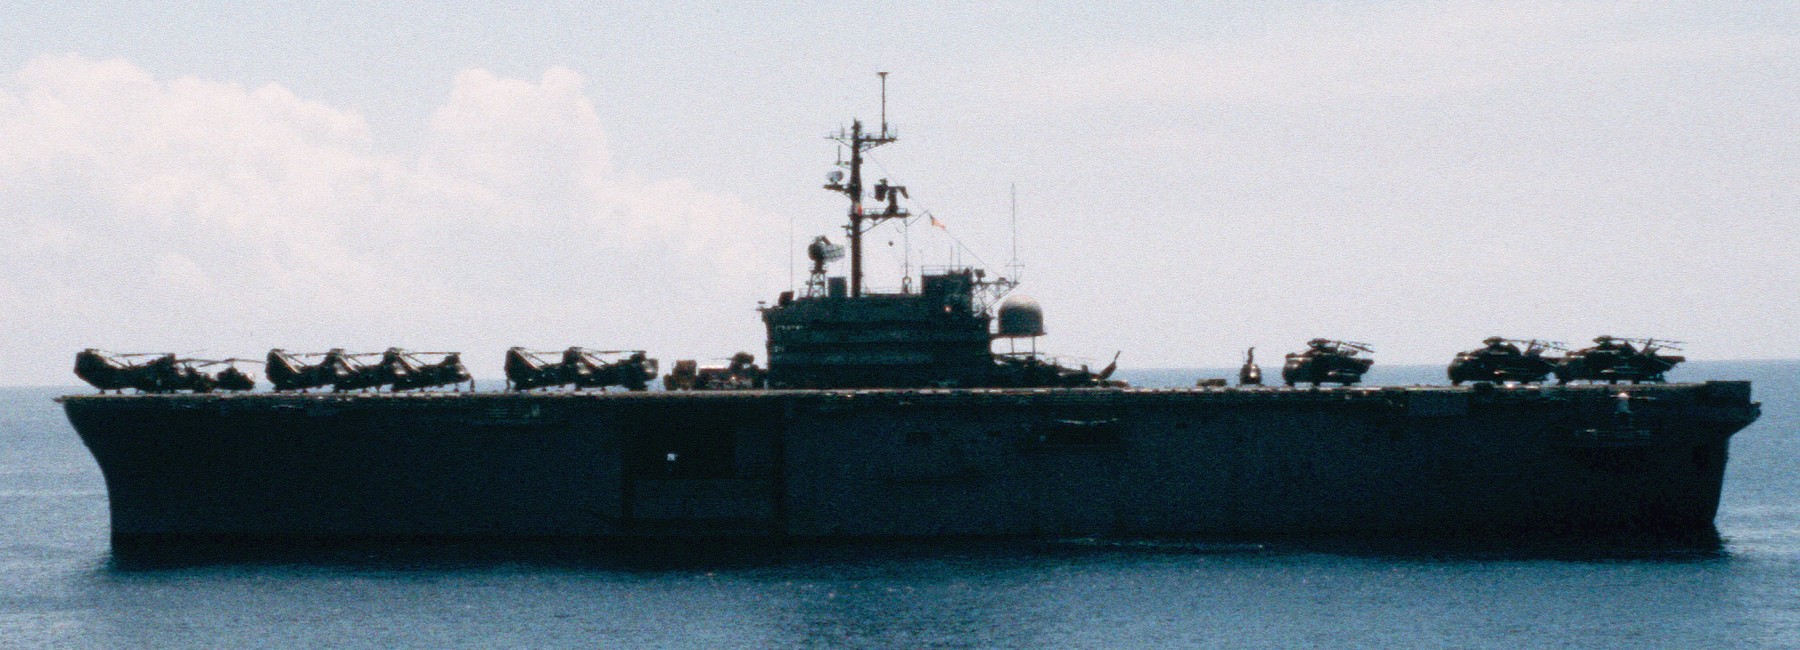 lph-7 uss guadalcanal iwo jima class amphibious assault ship landing platform helicopter us navy 56 exercise ocean venture puerto rico